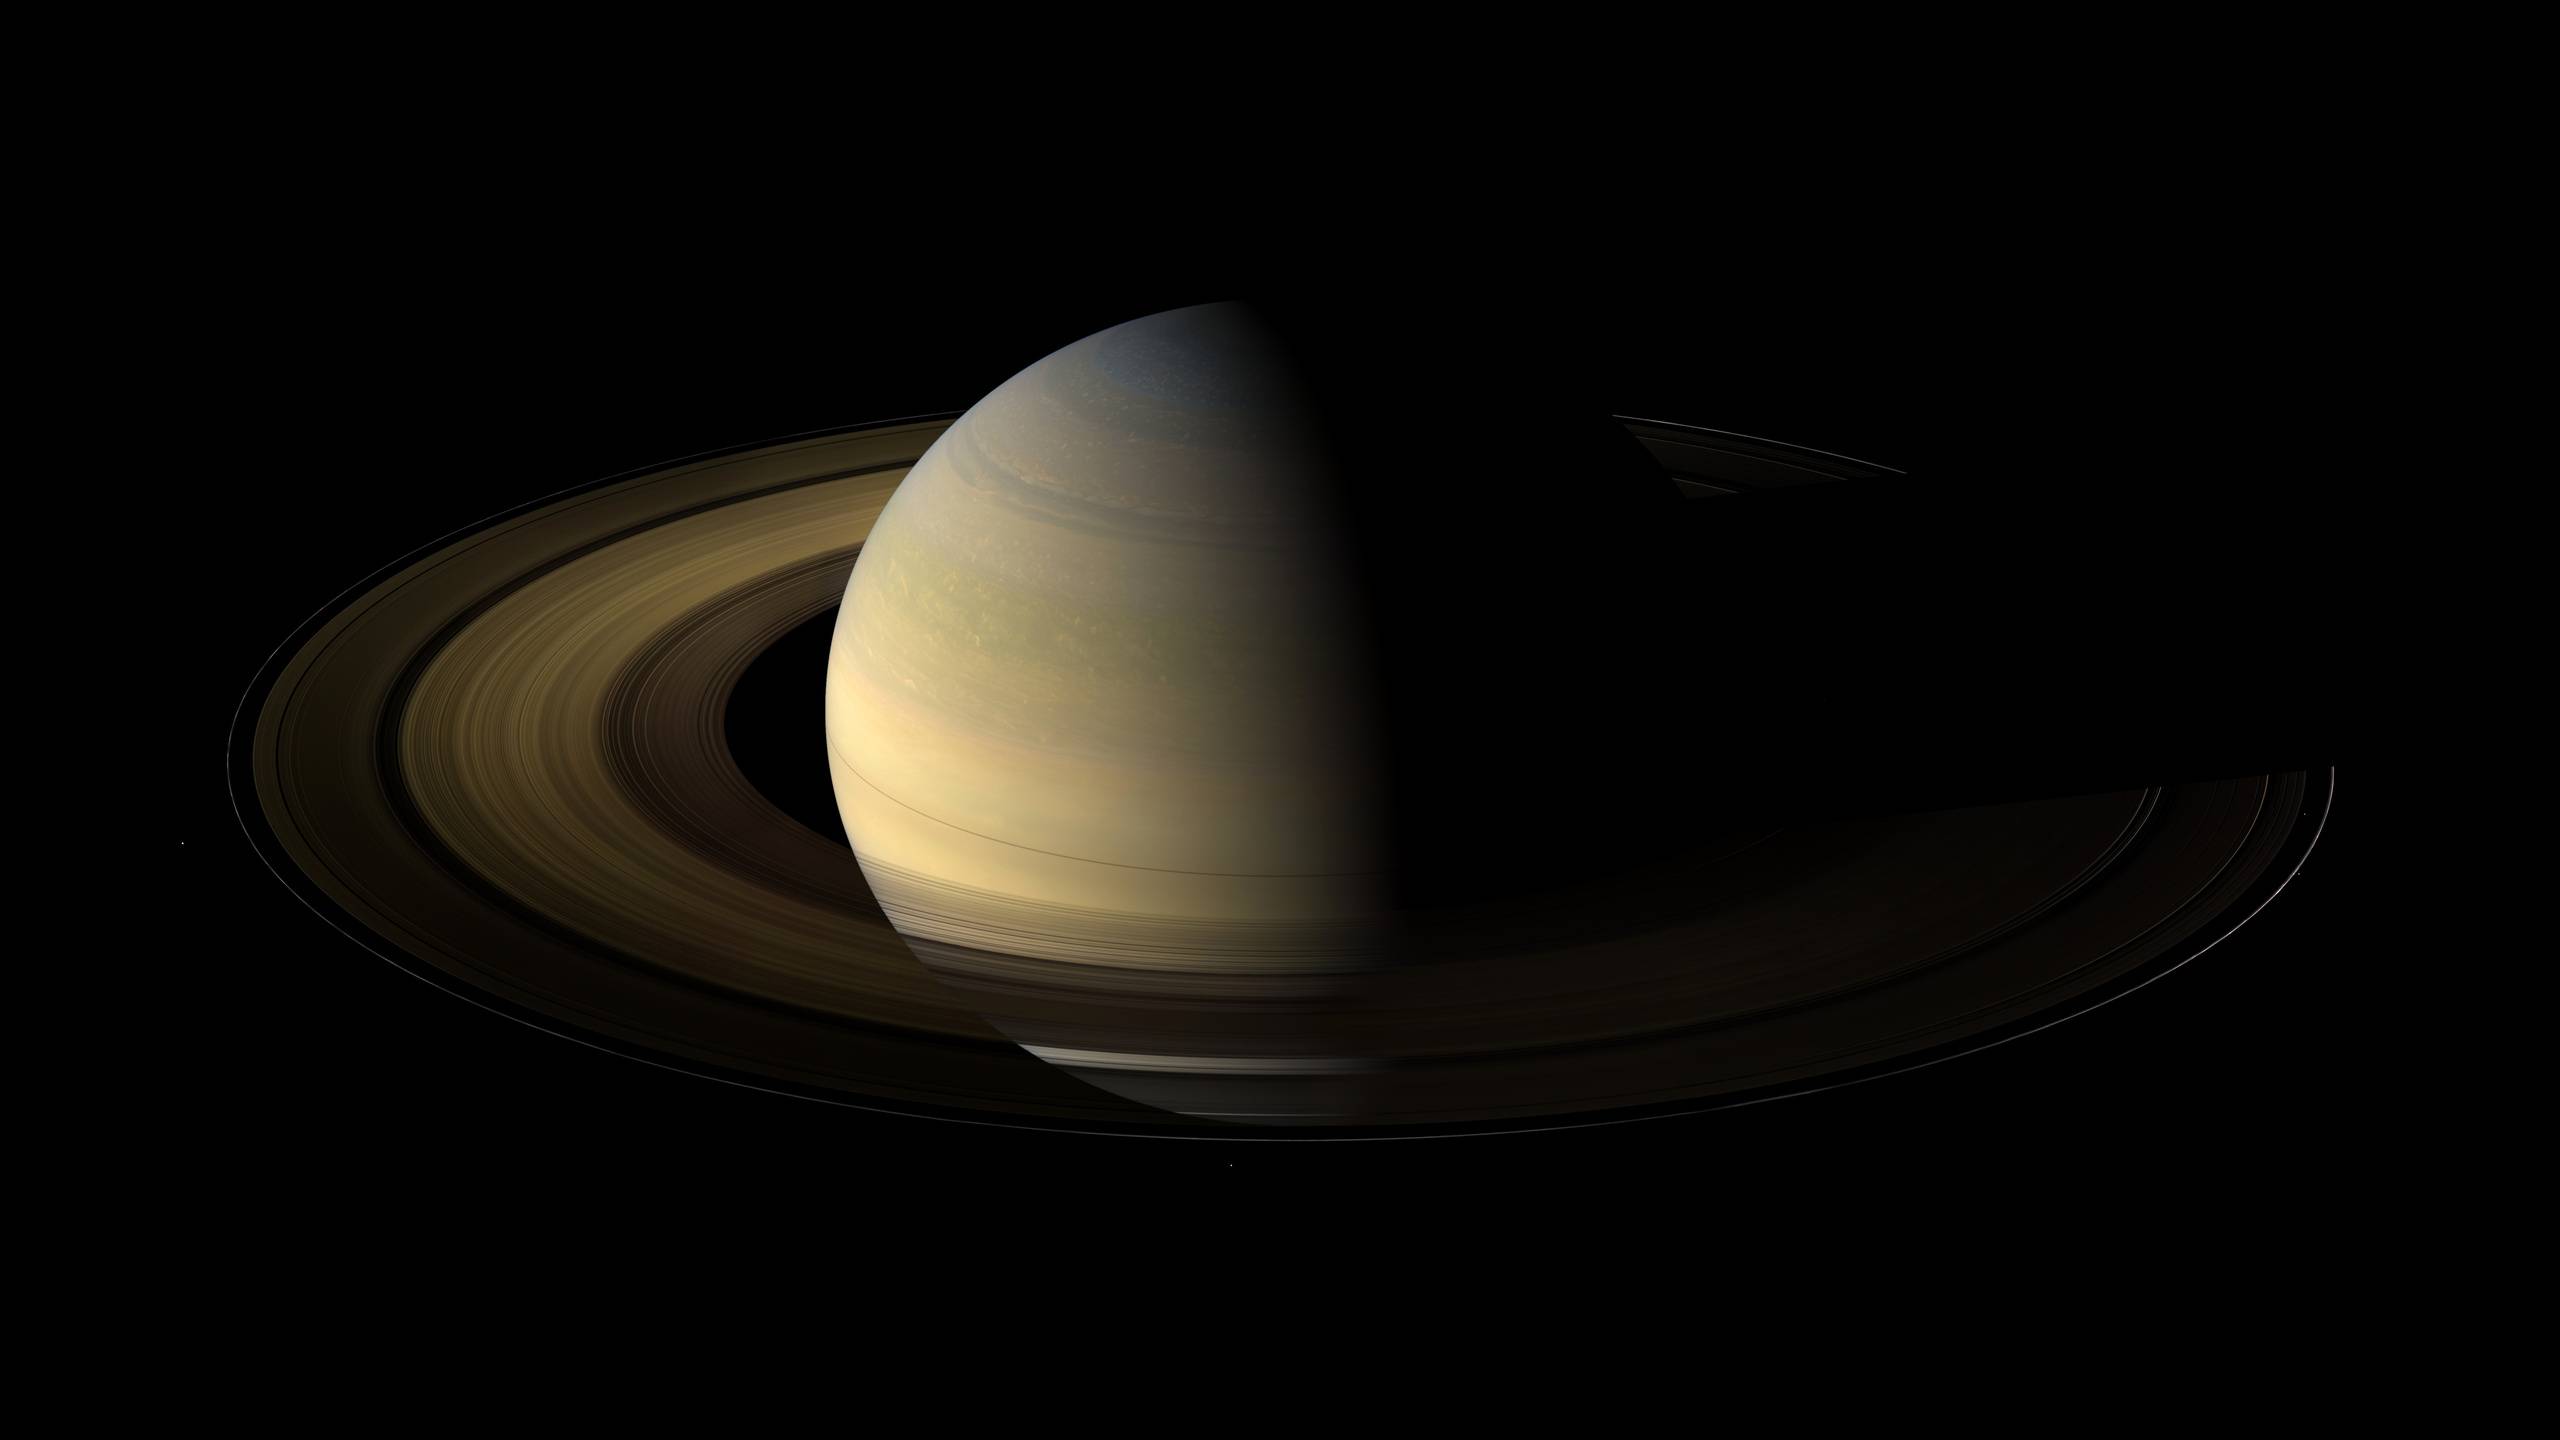 Обои невесомости кольца Сатурн на рабочий стол